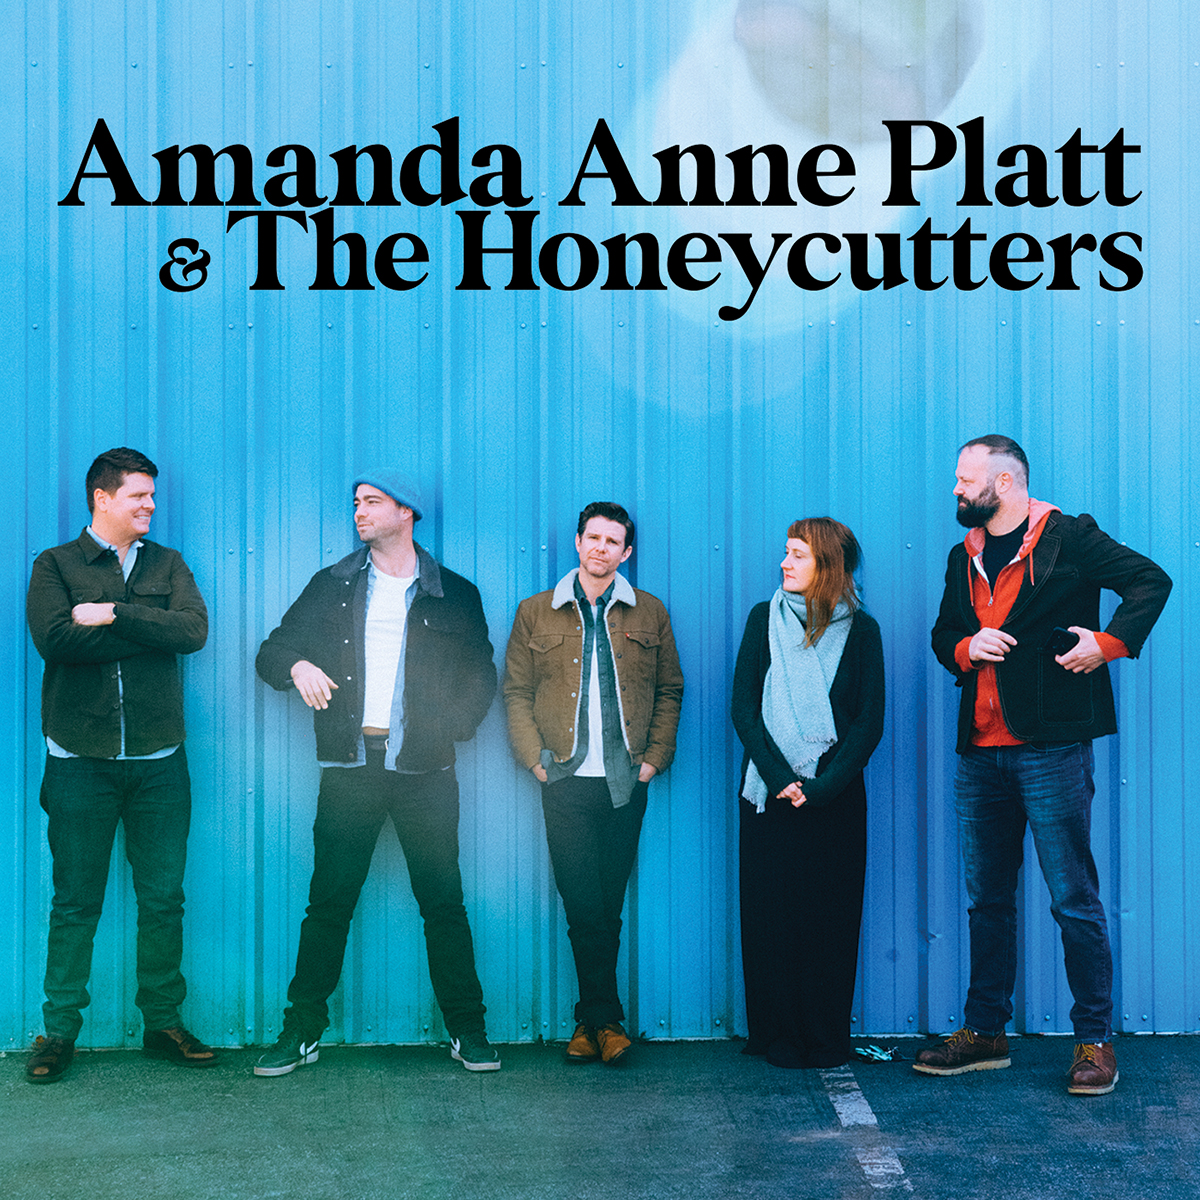 AMANDA ANNE PLATT & THE HONEYCUTTERS